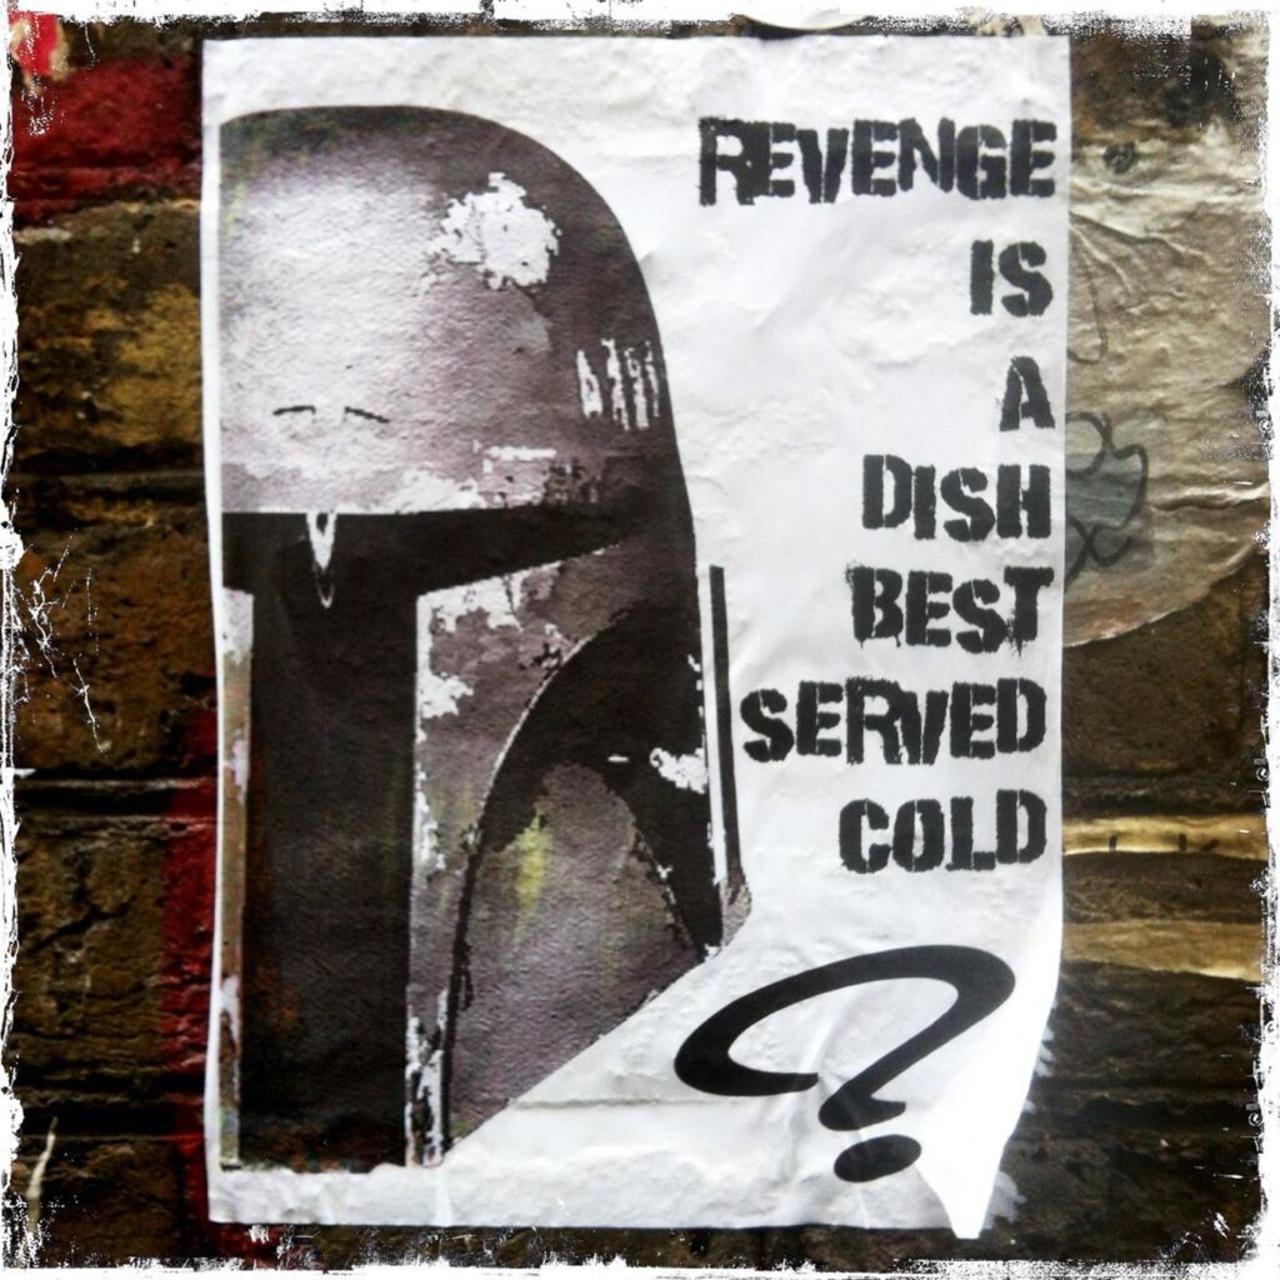 Revenge is a dish best served cold.. @captainsidcup @ishootstreetart #streetart #art #graffiti http://t.co/rbzNpqyLiQ